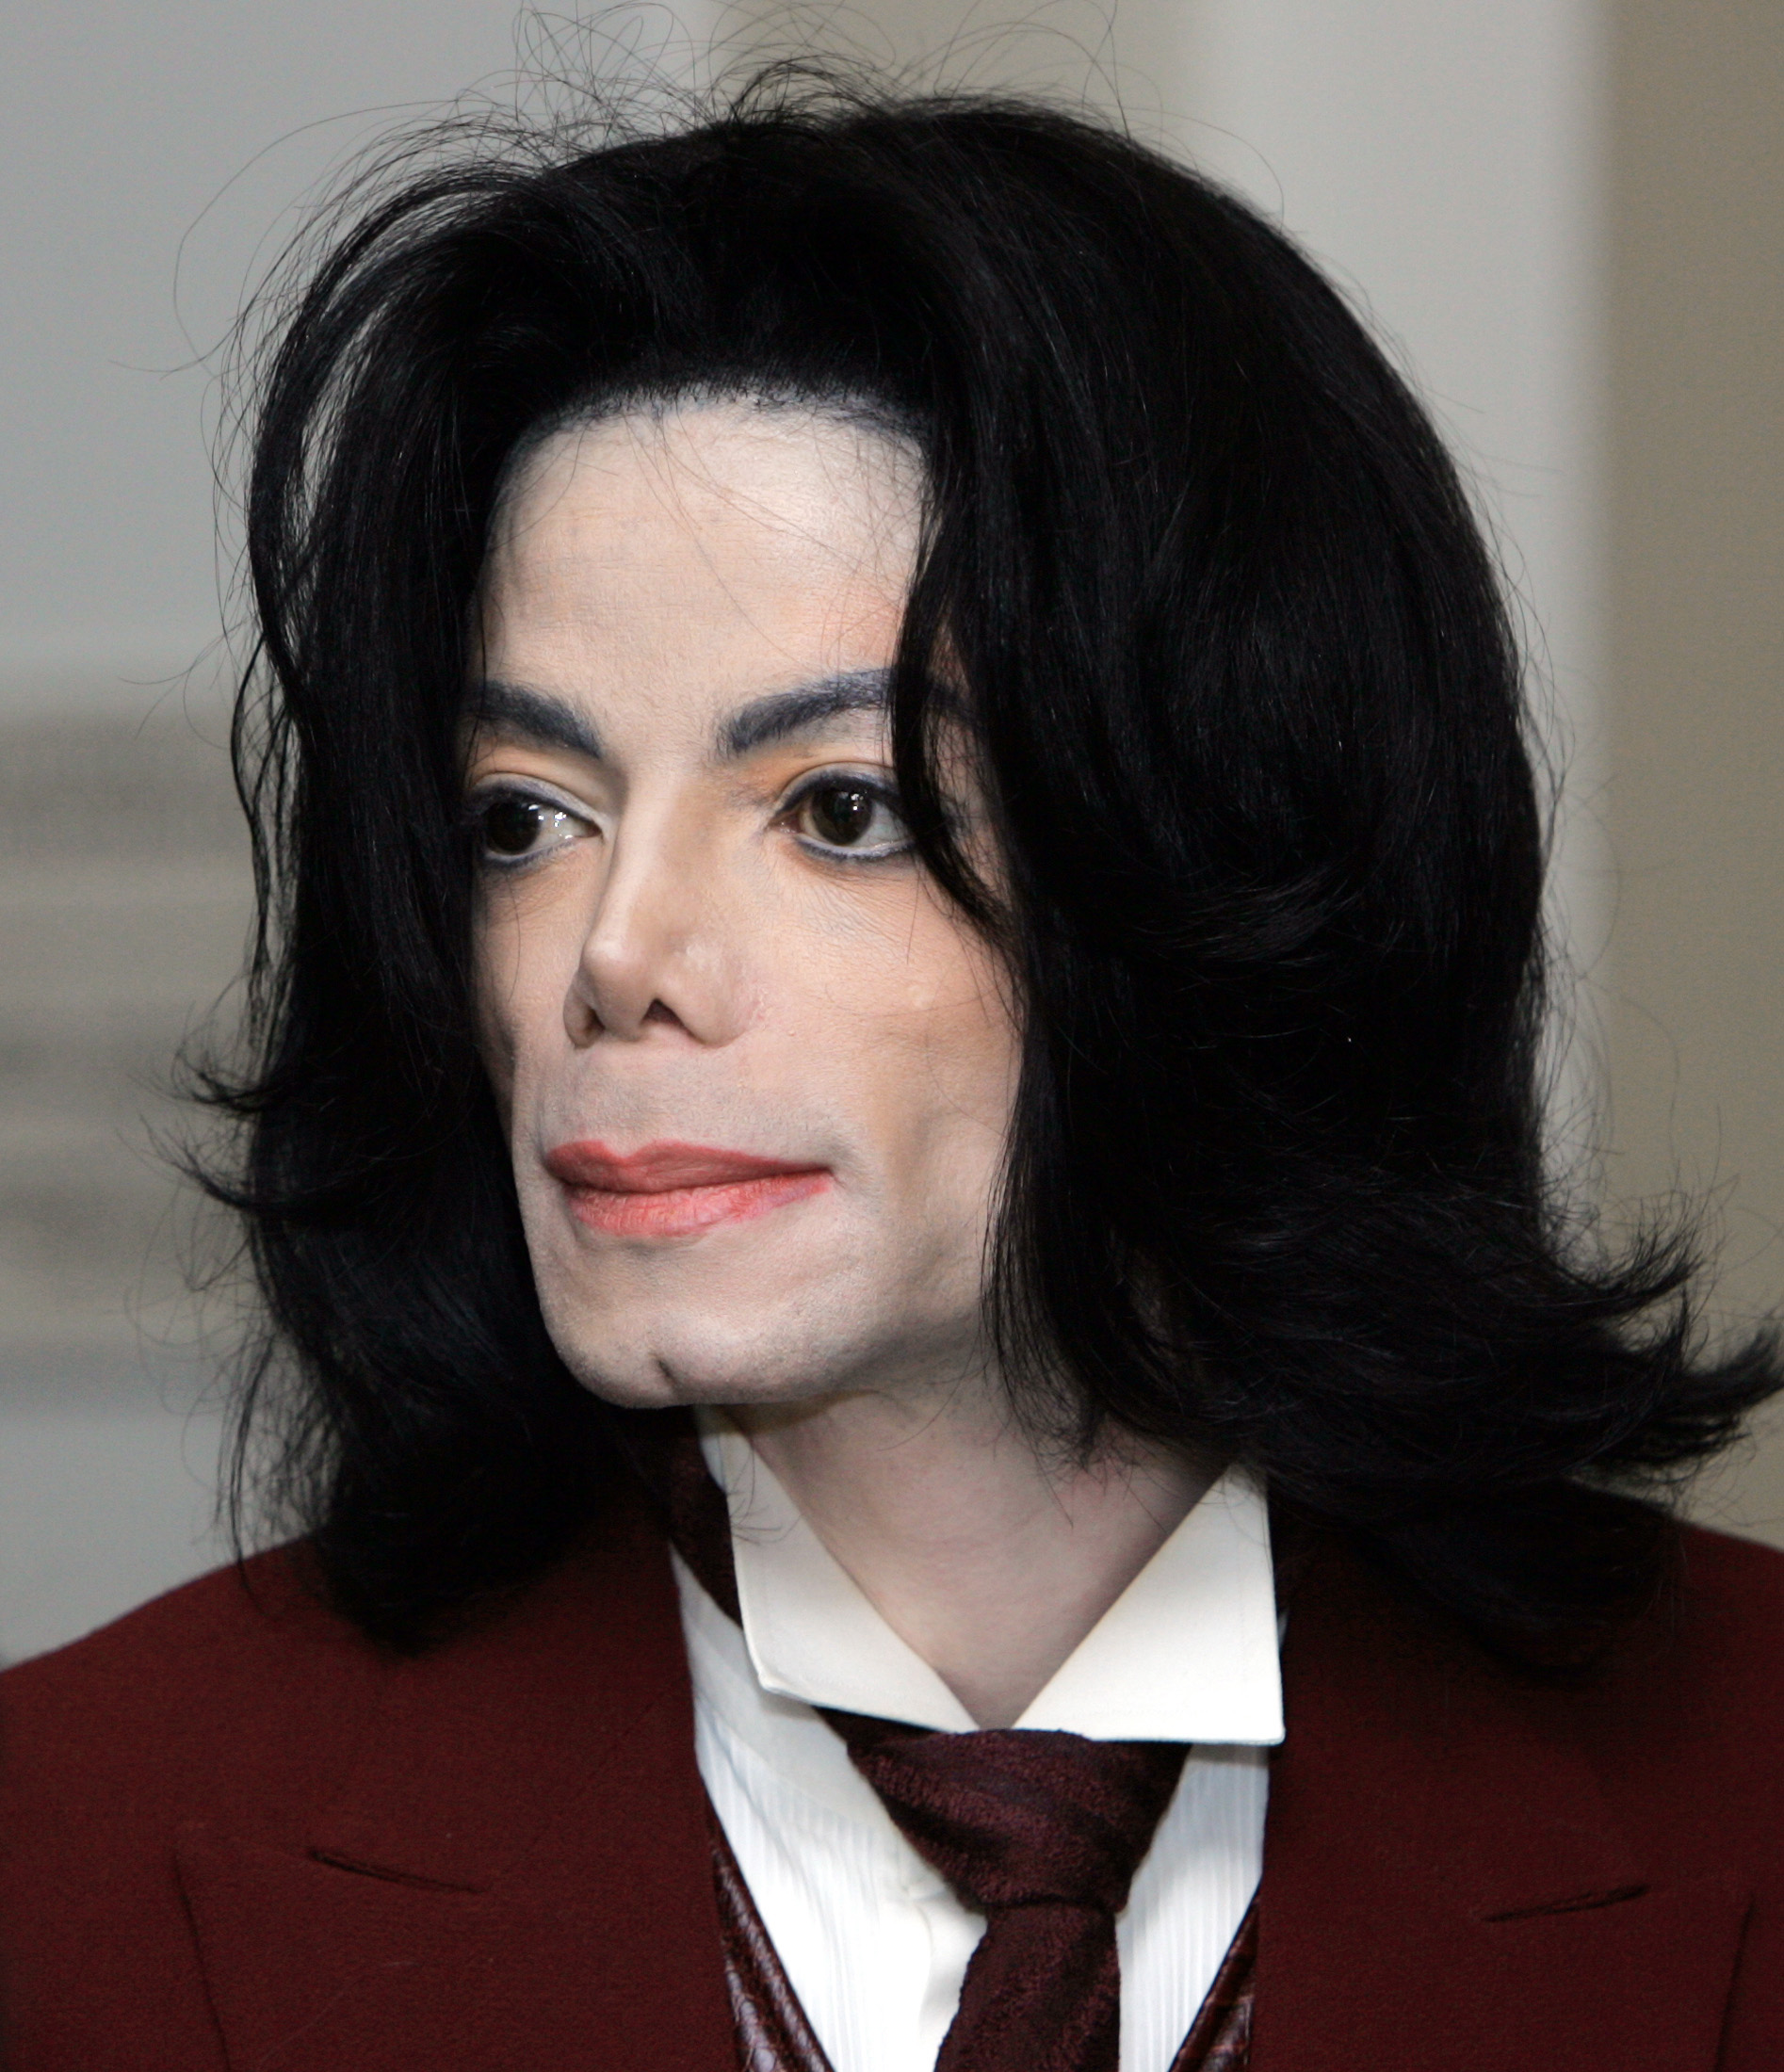 Michael Jackson im Jahr 2005 | Quelle: Getty Images